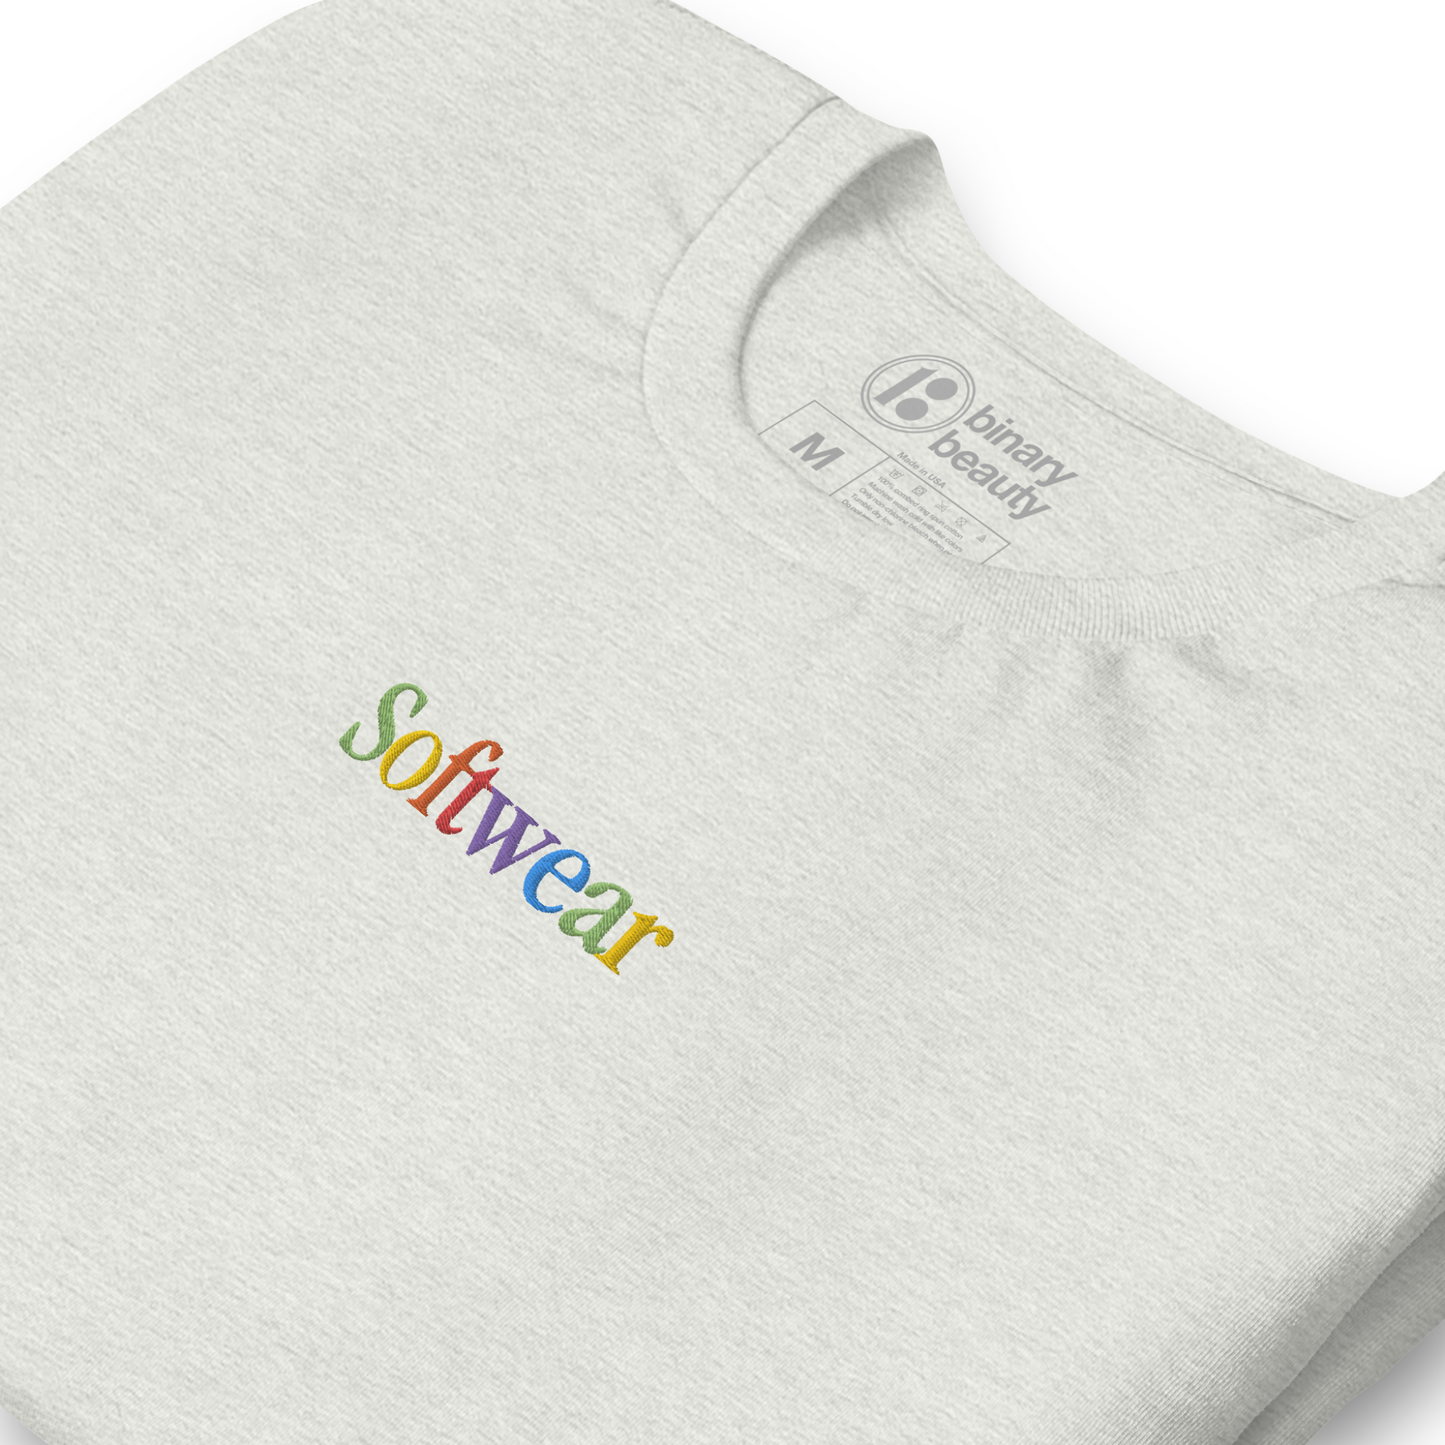 Apple x Pride Softwear Shirt in Analog